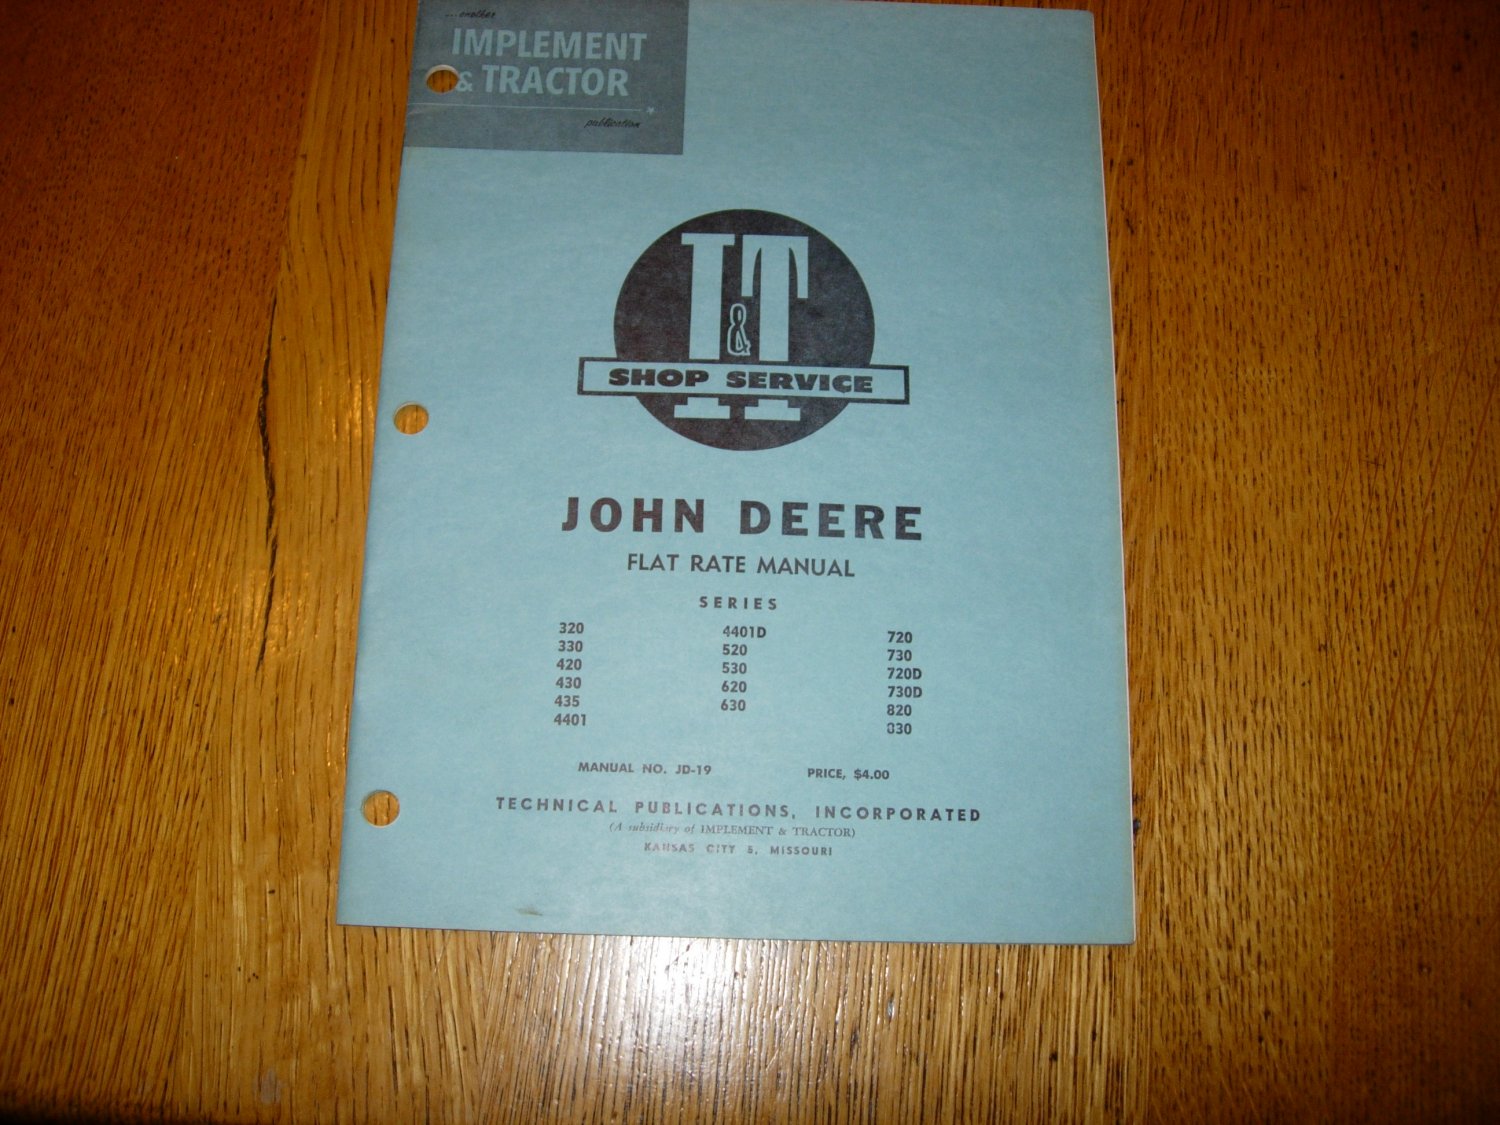 I & T Shop Service JOHN DEERE Flat Rate Manual JD-19